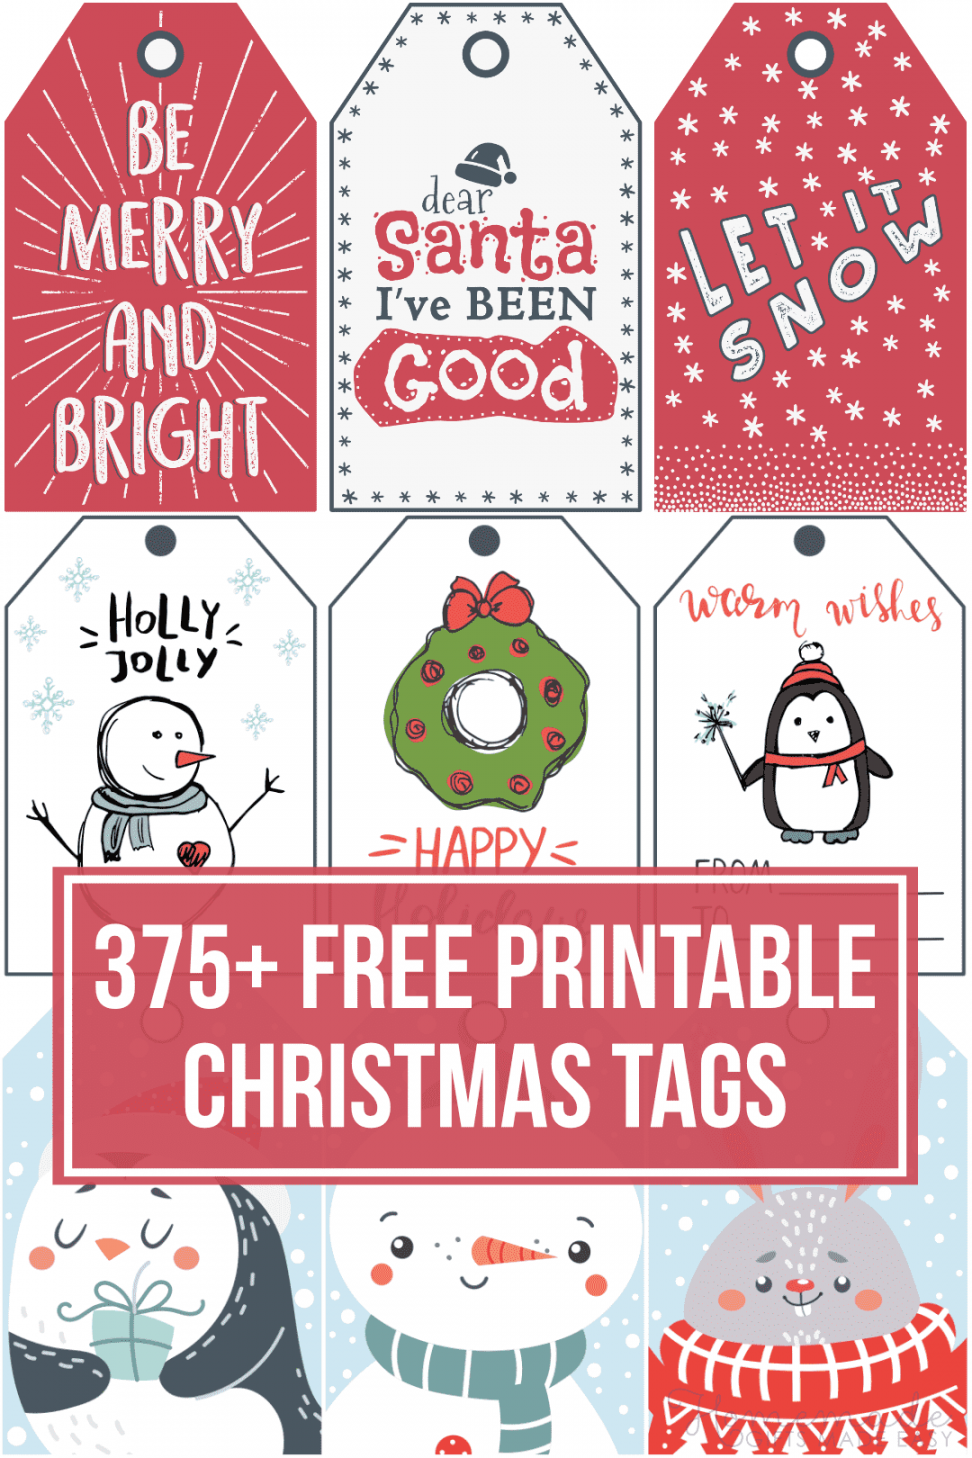 + Free Printable Christmas Tags for your Holiday Gifts